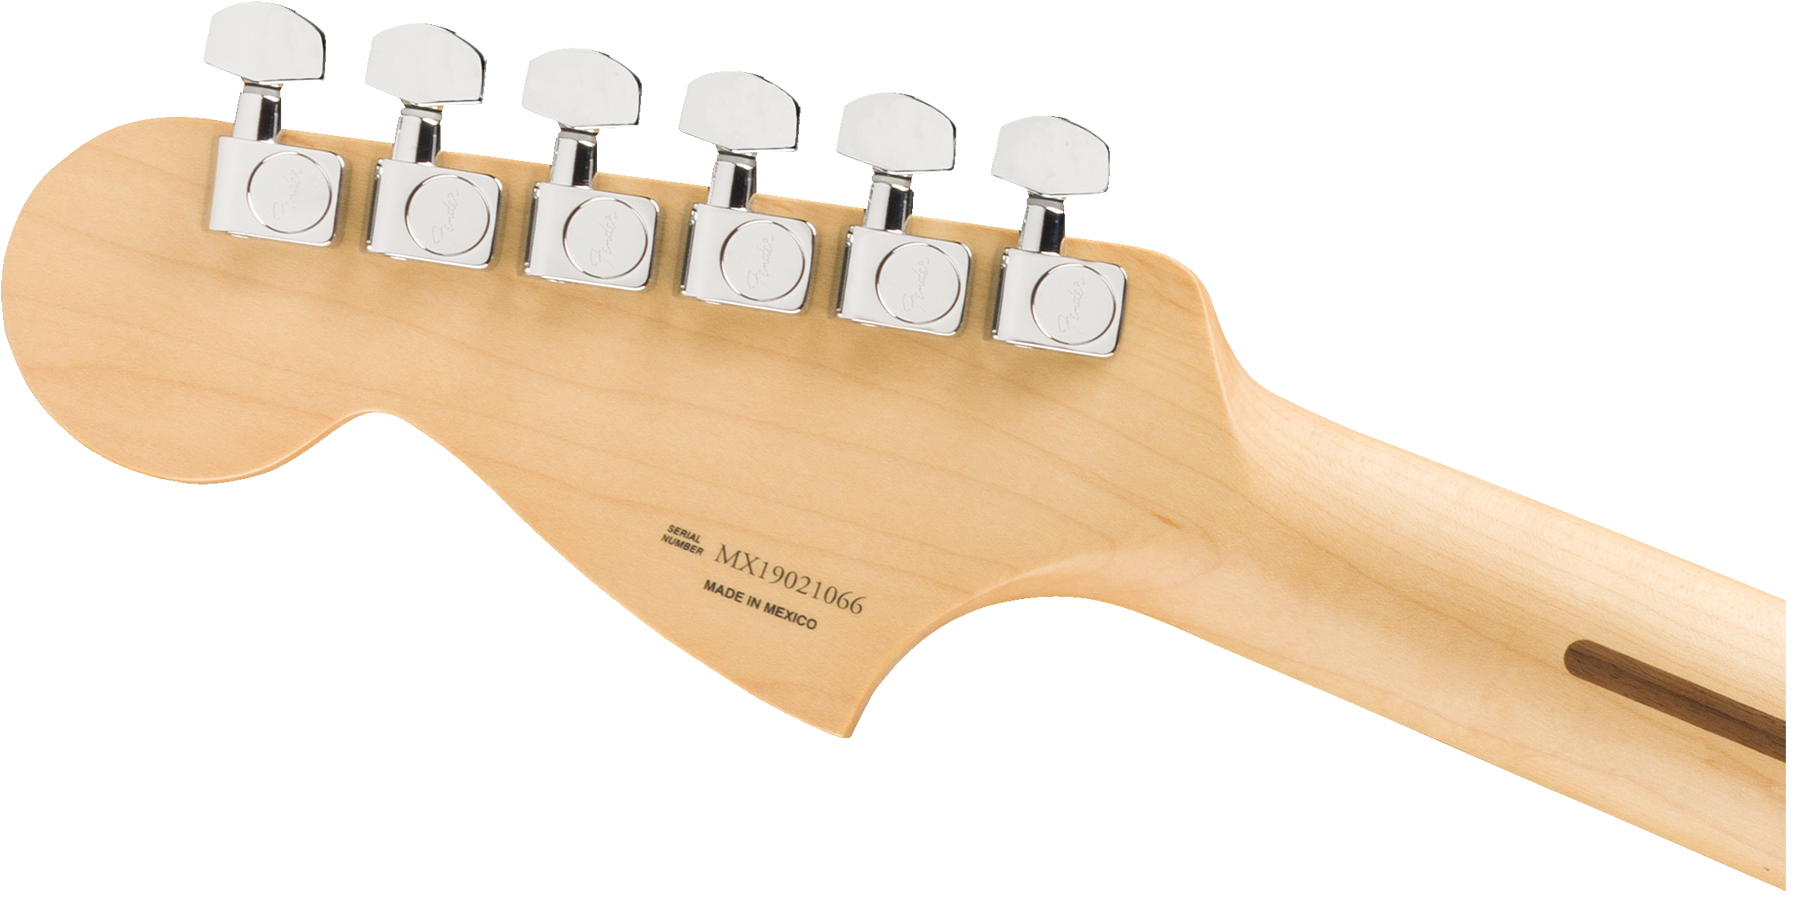 Fender Jaguar Player Mex Hs Pf - Capri Orange - Guitarra electrica retro rock - Variation 3